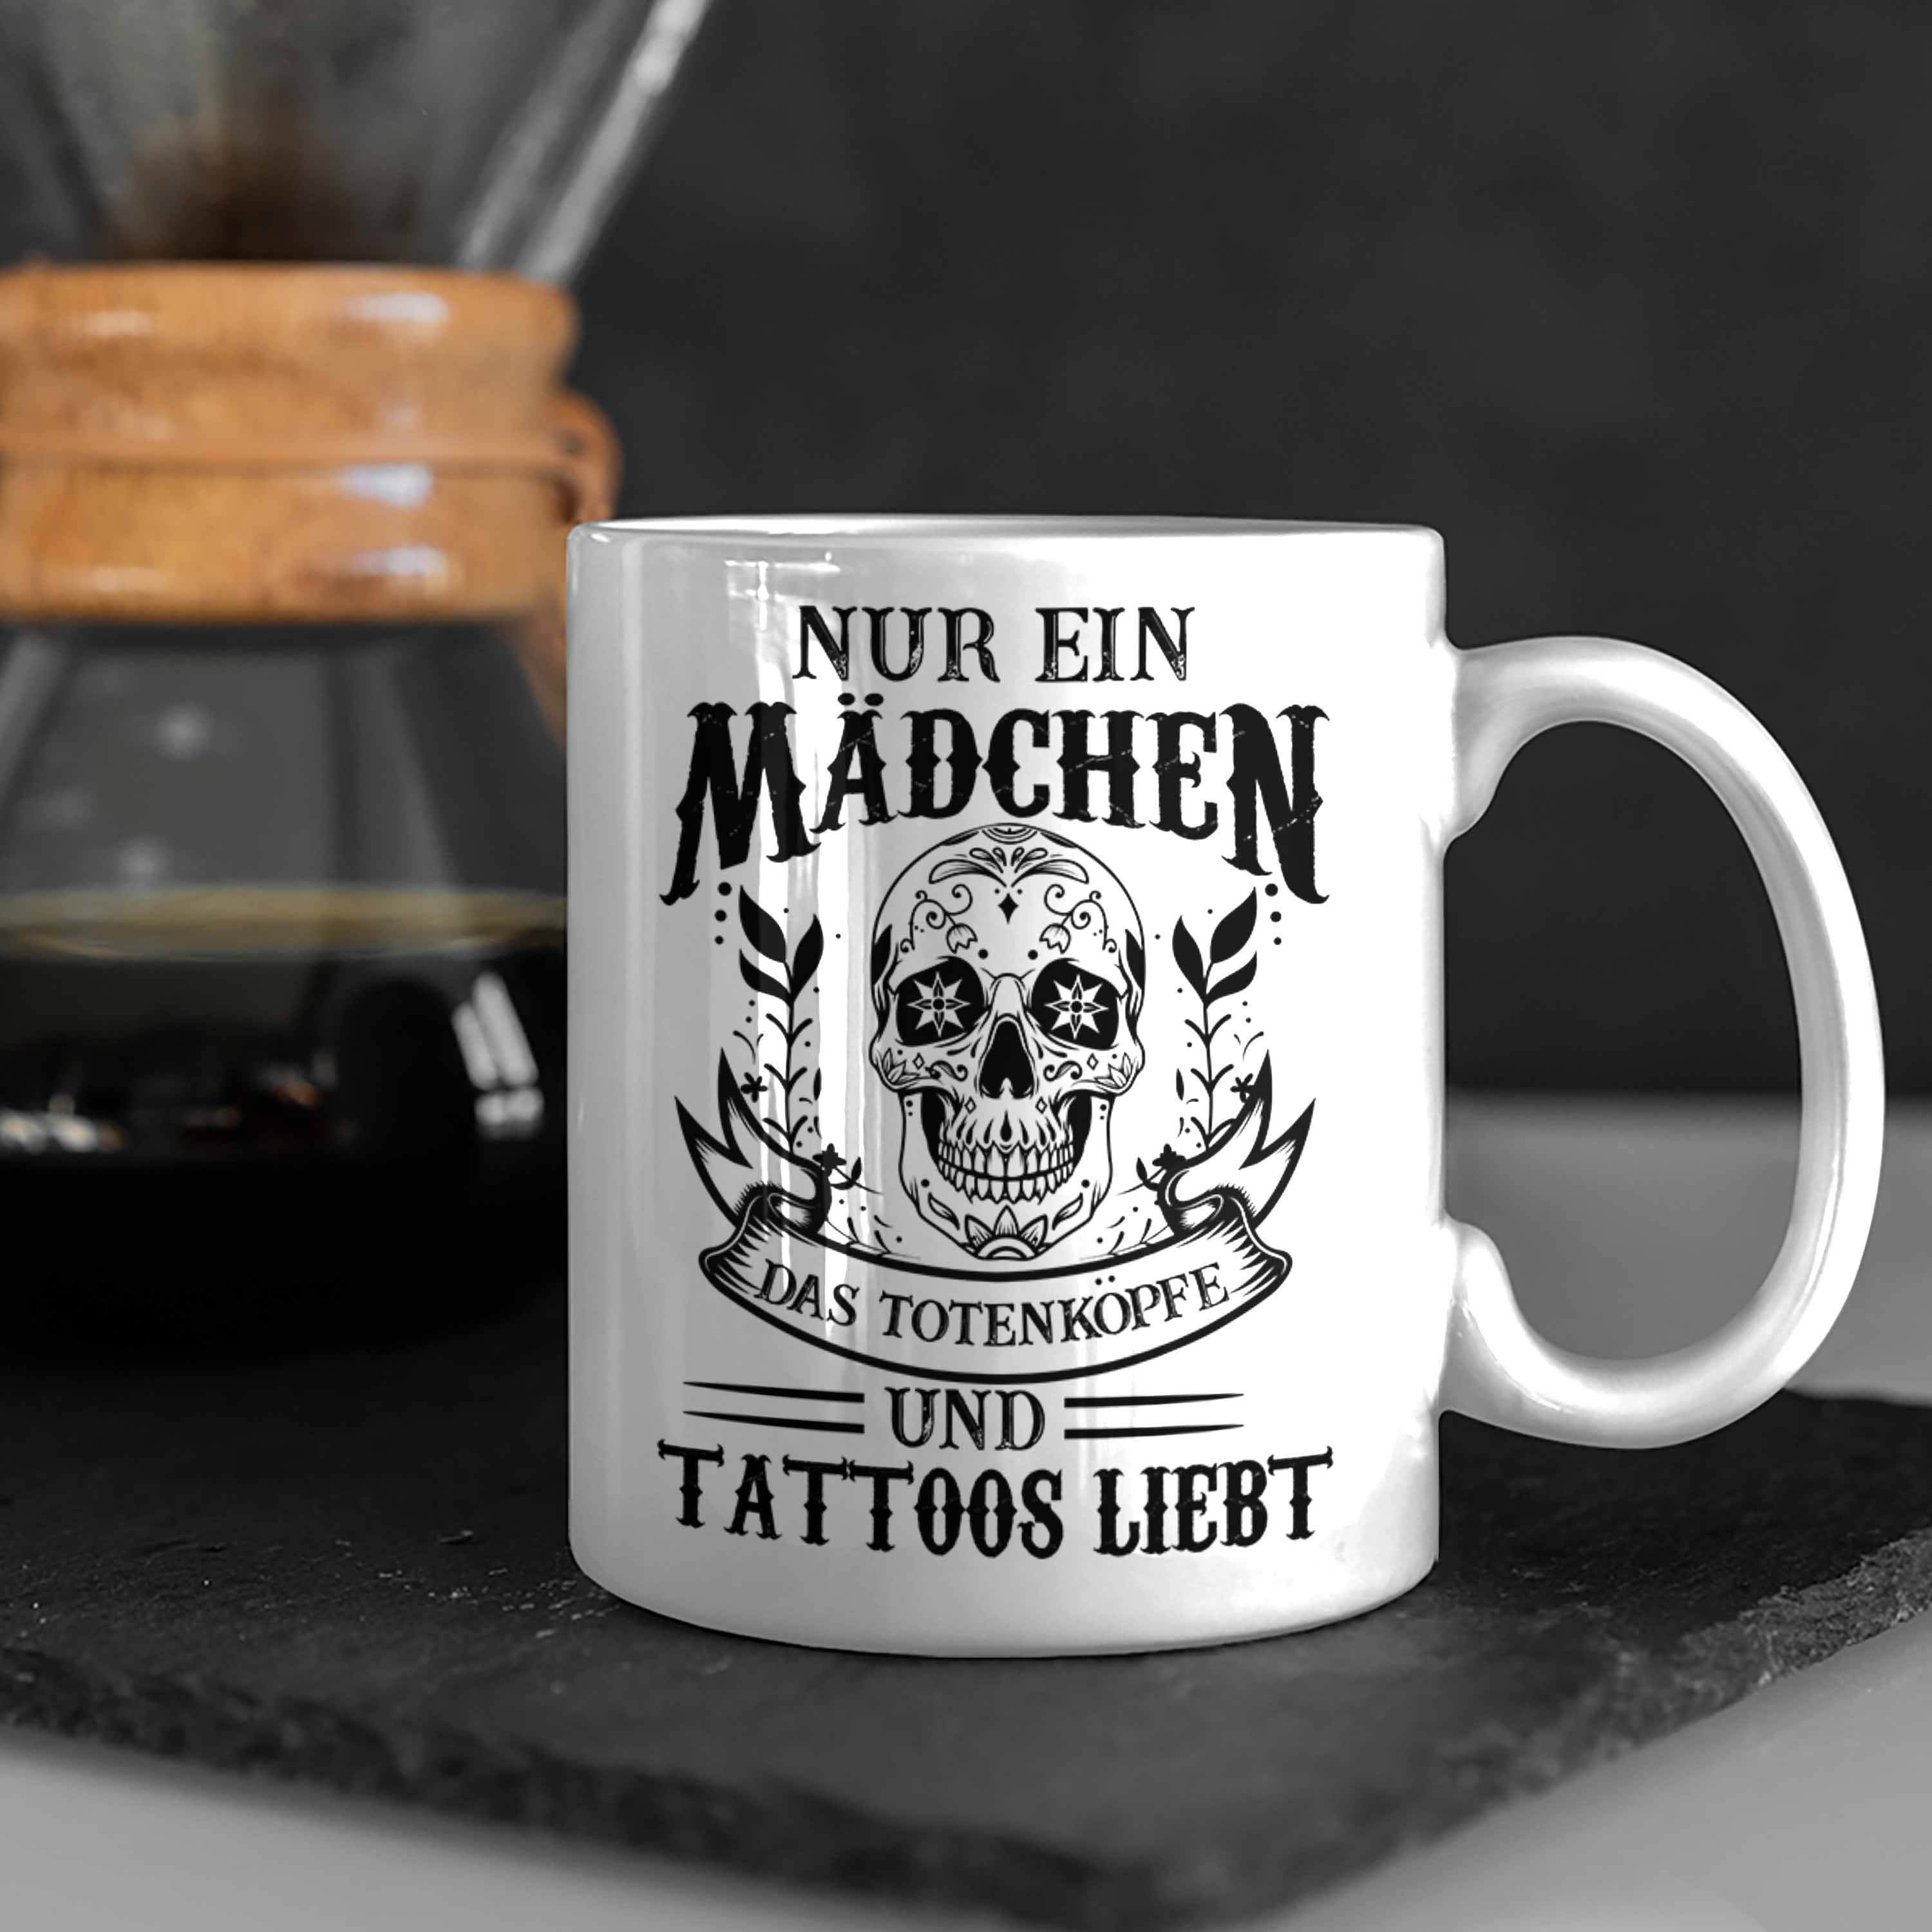 Tassen Frauen Tattoo Tätowiererin Weiss Tasse - Tattoos Tasse Geschenk Kaffeetasse Trendation Trendation Totenkopf